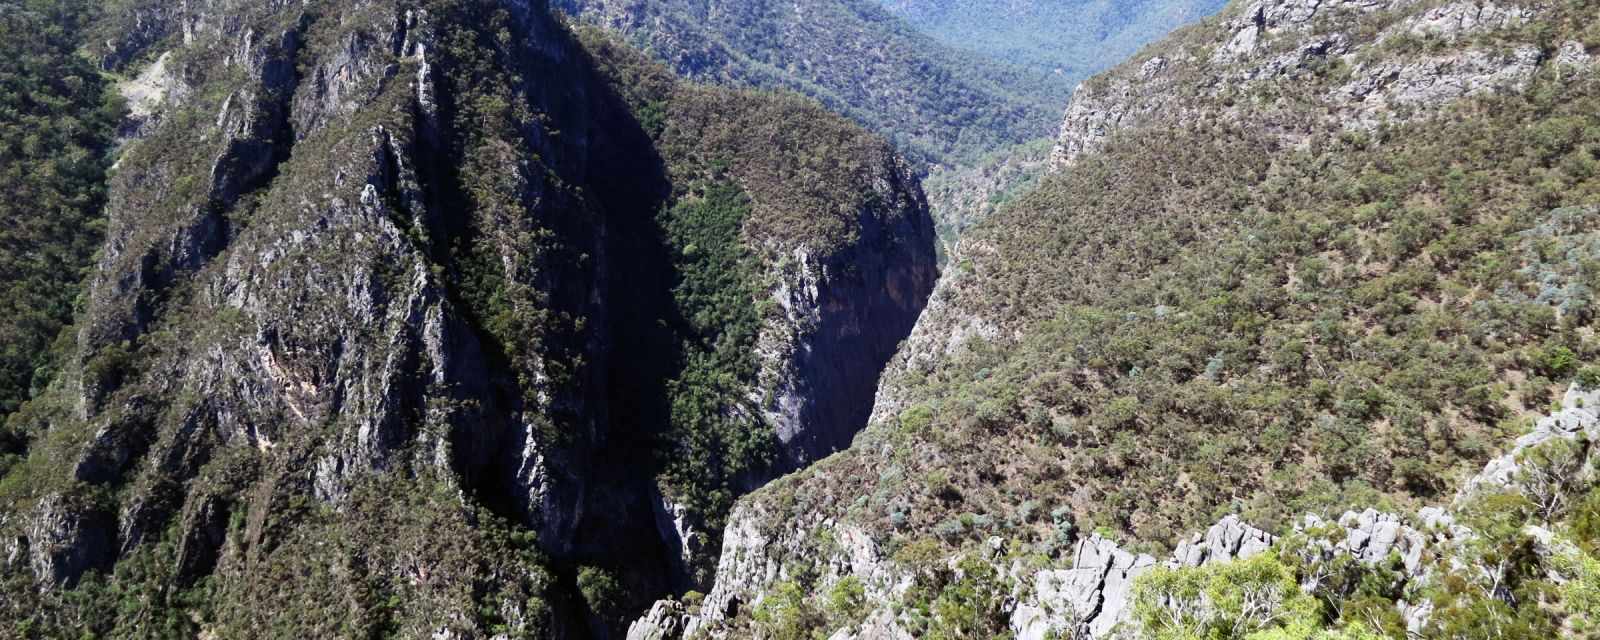 Bungonia Gorge Hiking Trails - Red Track